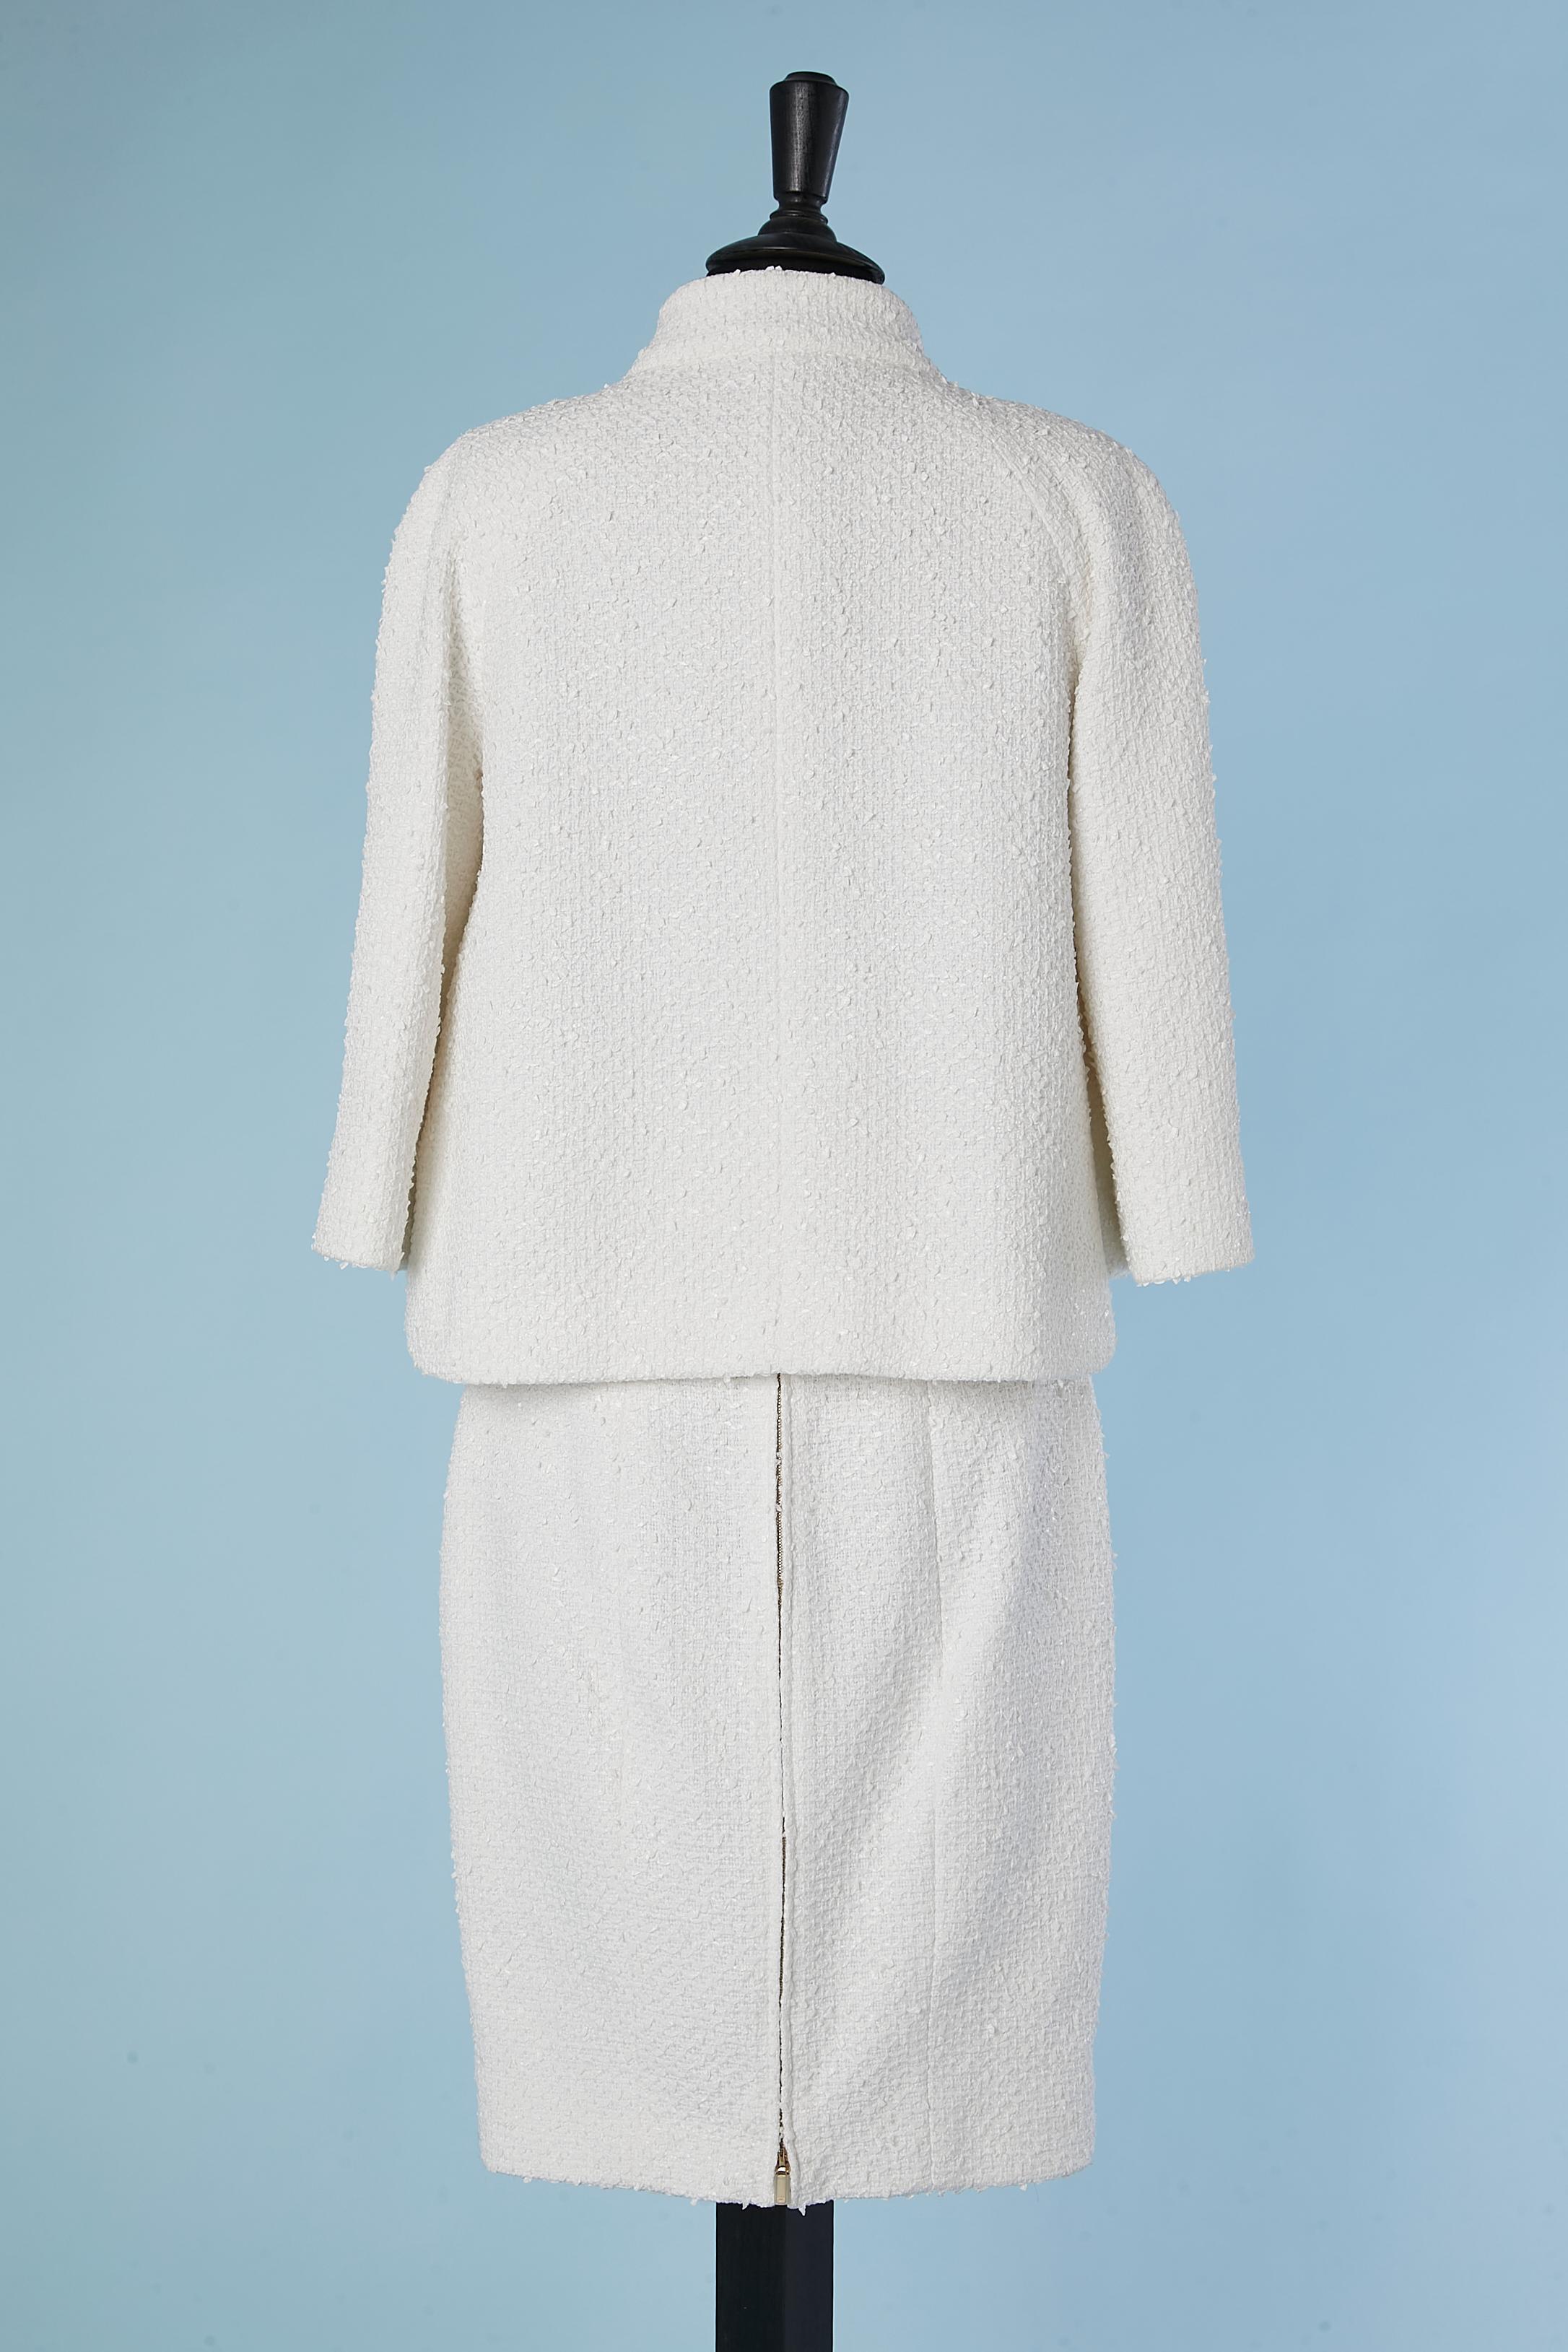 Tailleur jupe en tweed blanc avec bouton en forme de hibou de marque Chanel  en vente 5